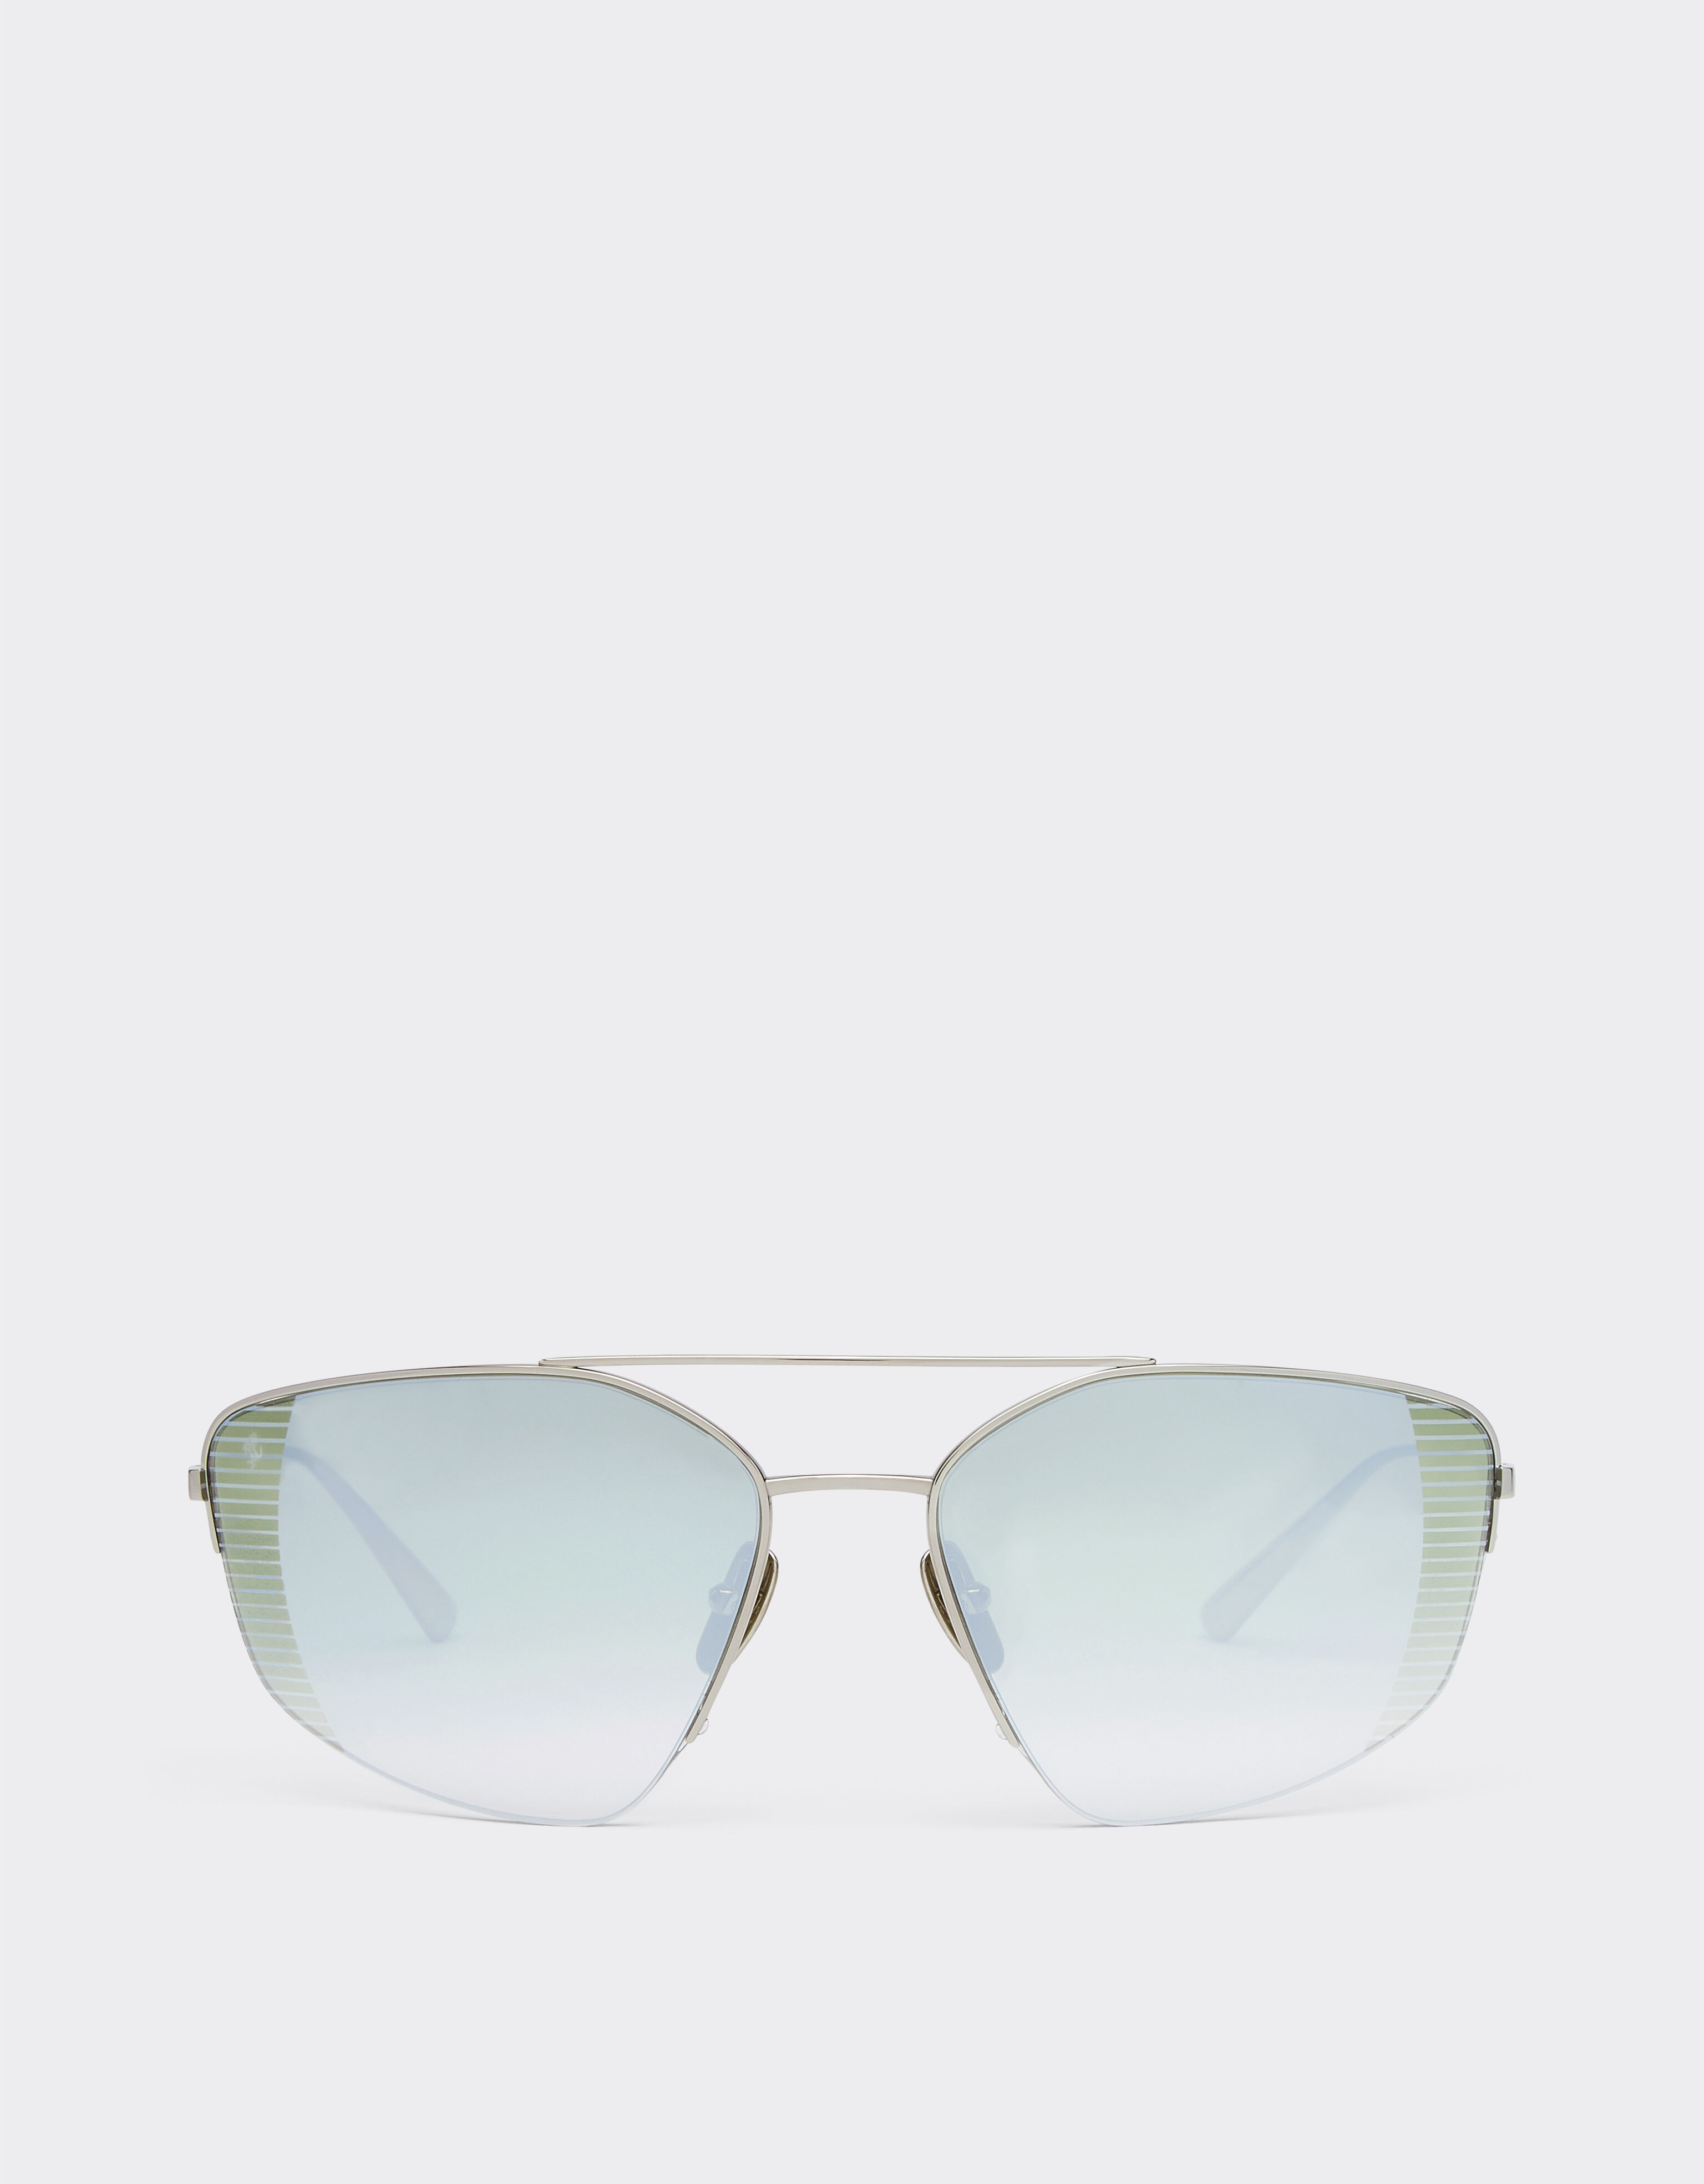 ${brand} Ferrari sunglasses in silver titanium with gradient green mirror lenses ${colorDescription} ${masterID}